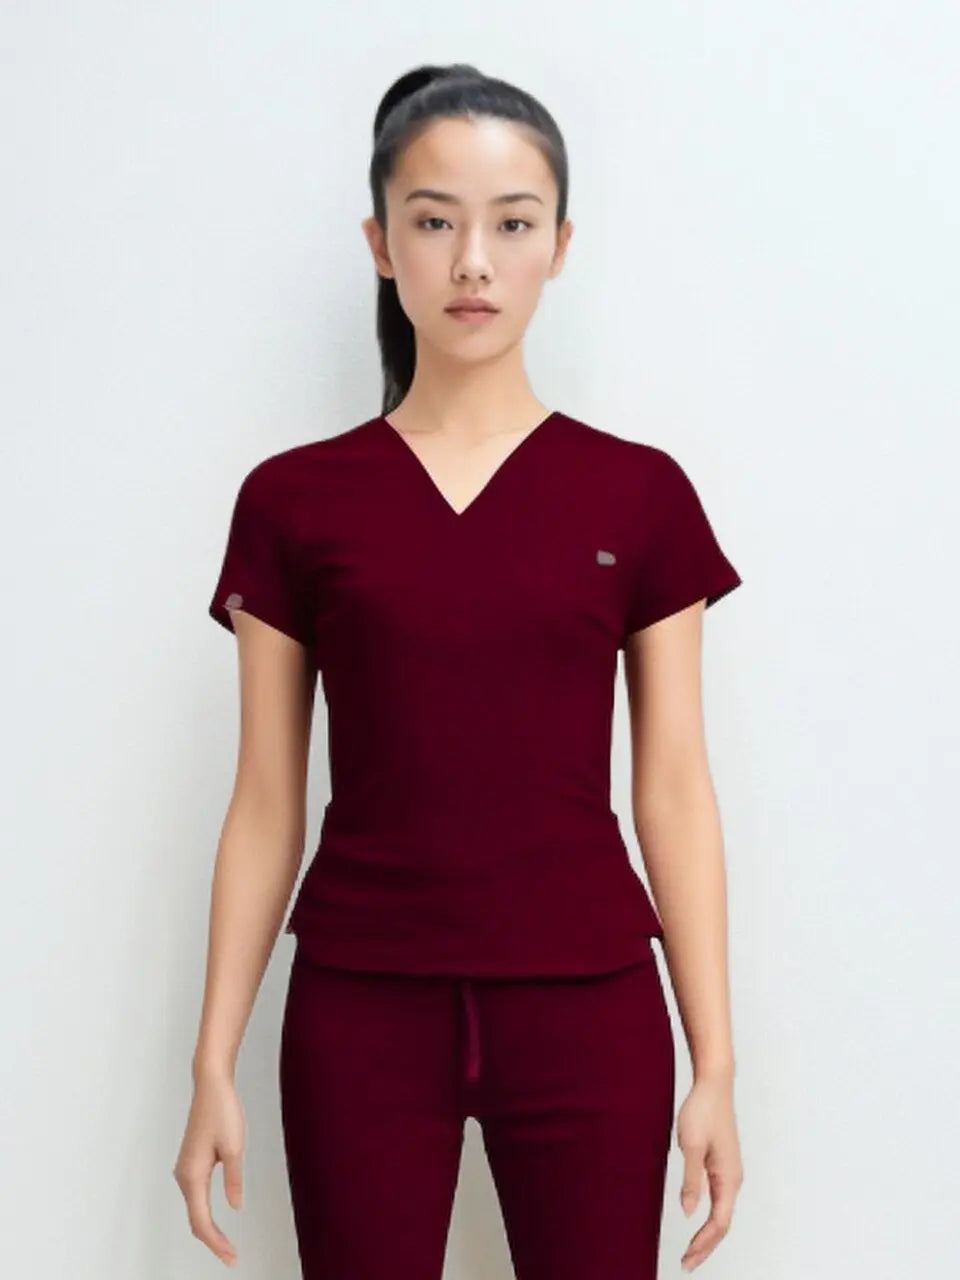 Modern Fit Nurse Attire: Tailored Comfort My Store